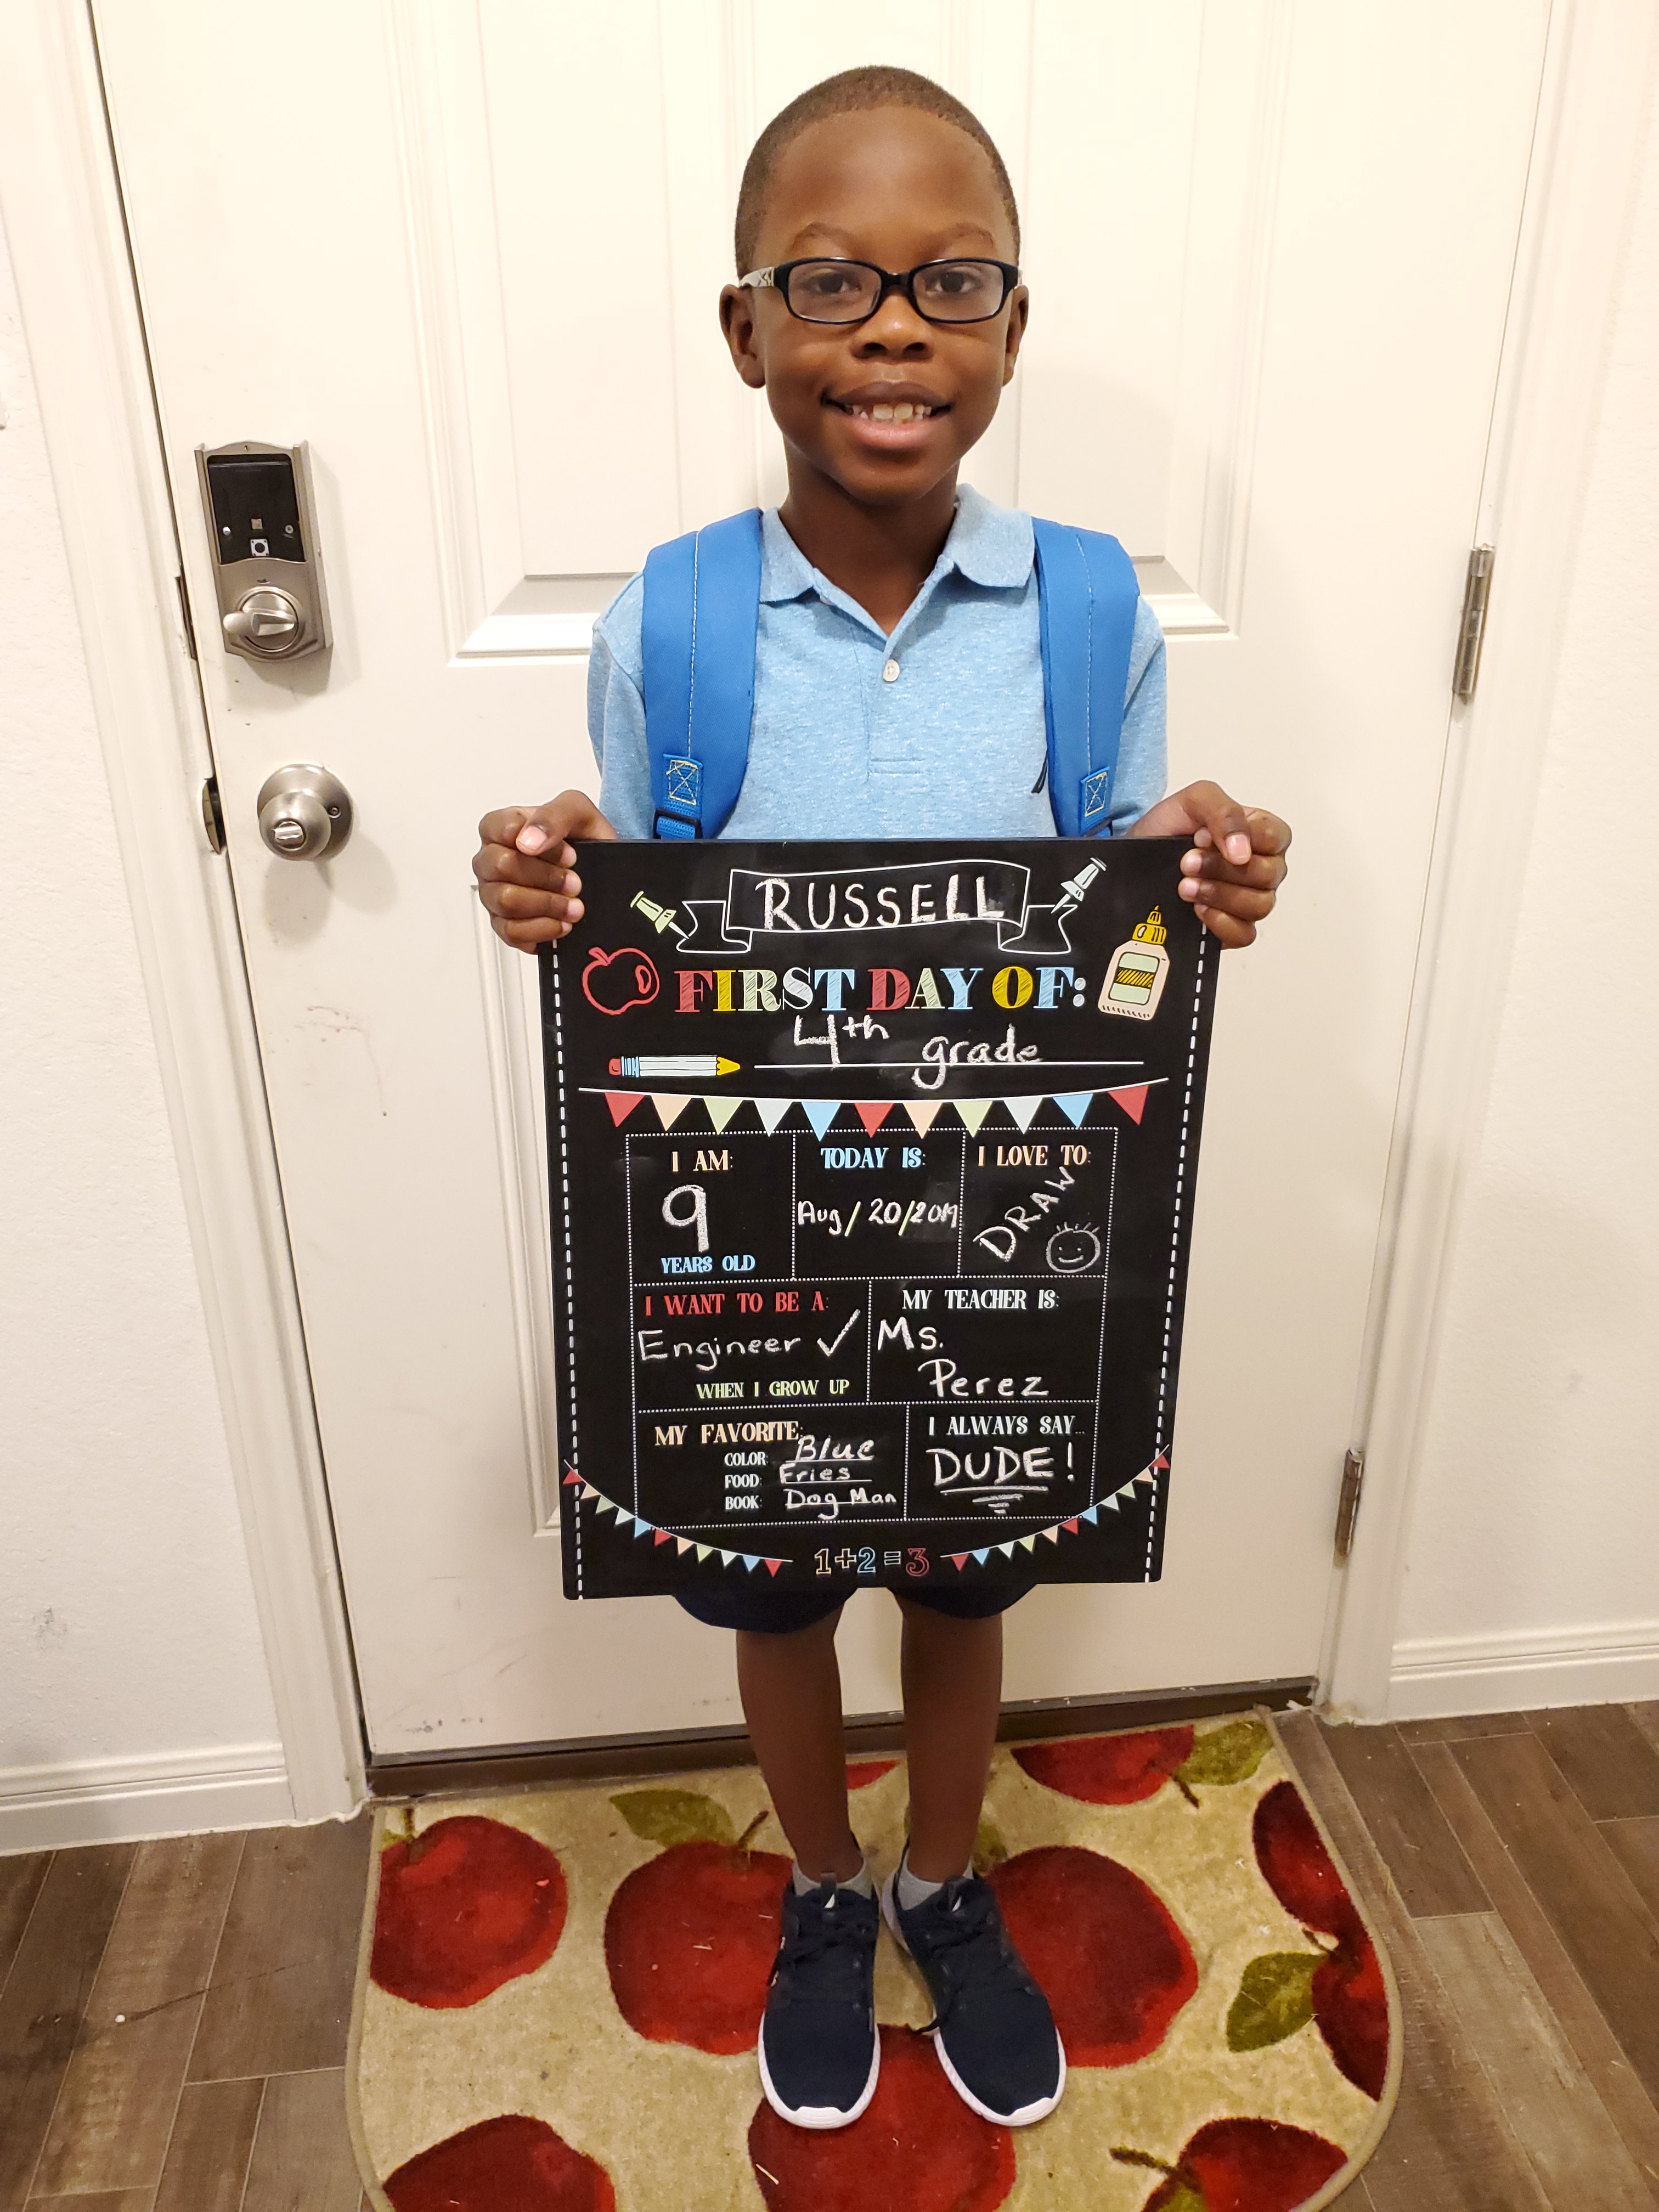 Russell Johnson Jr. heading to 4th grade